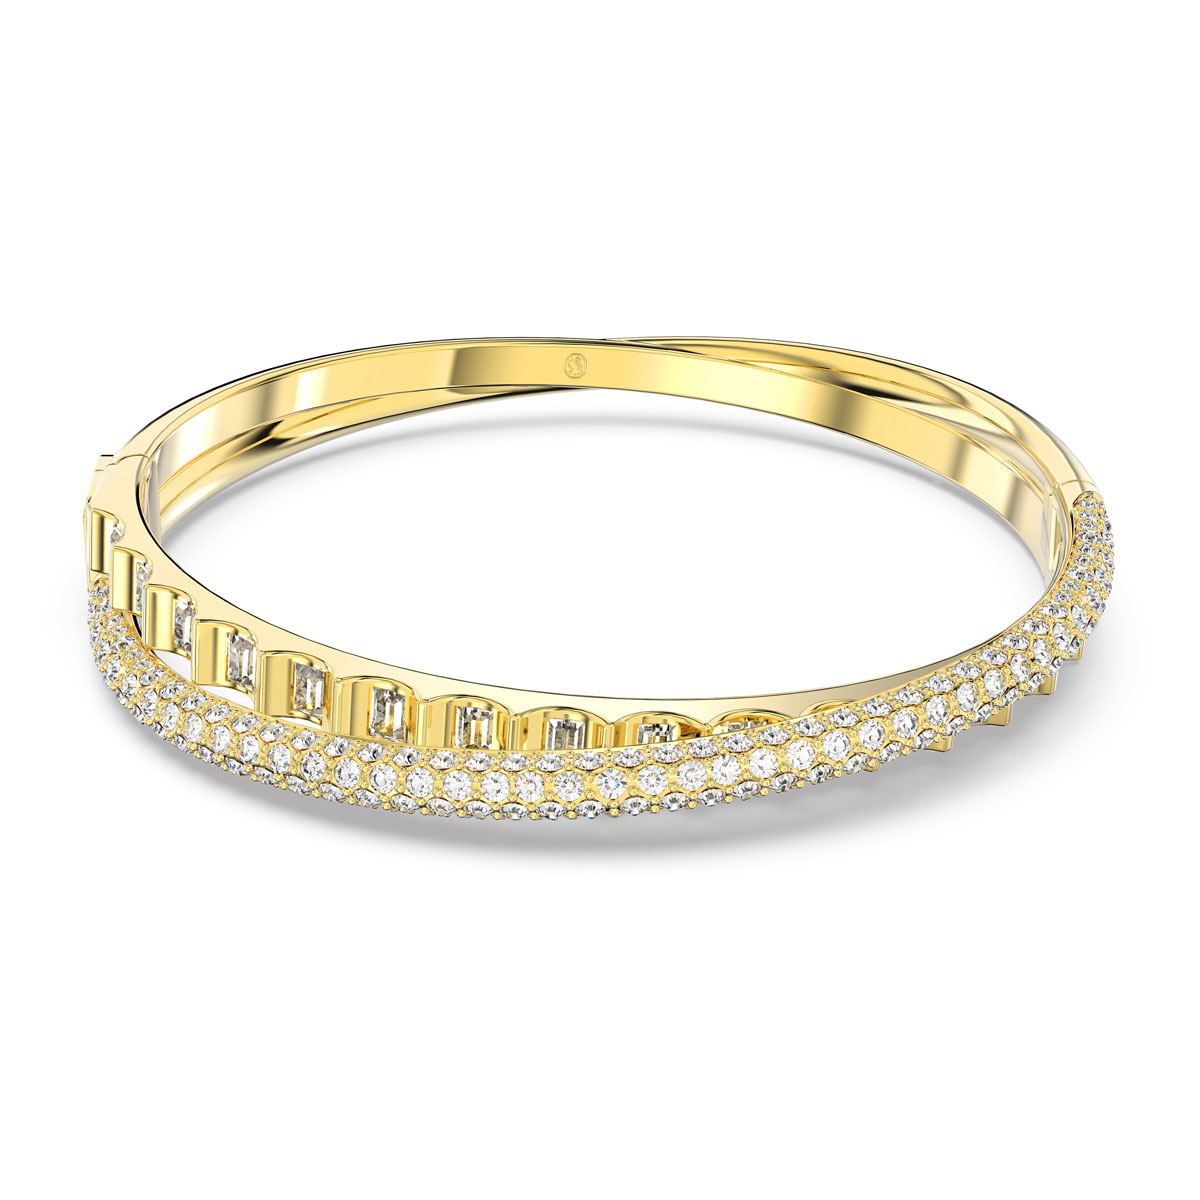 Swarovski Jewelry Bracelet Rota, Bangle Double Crystal, Gold M